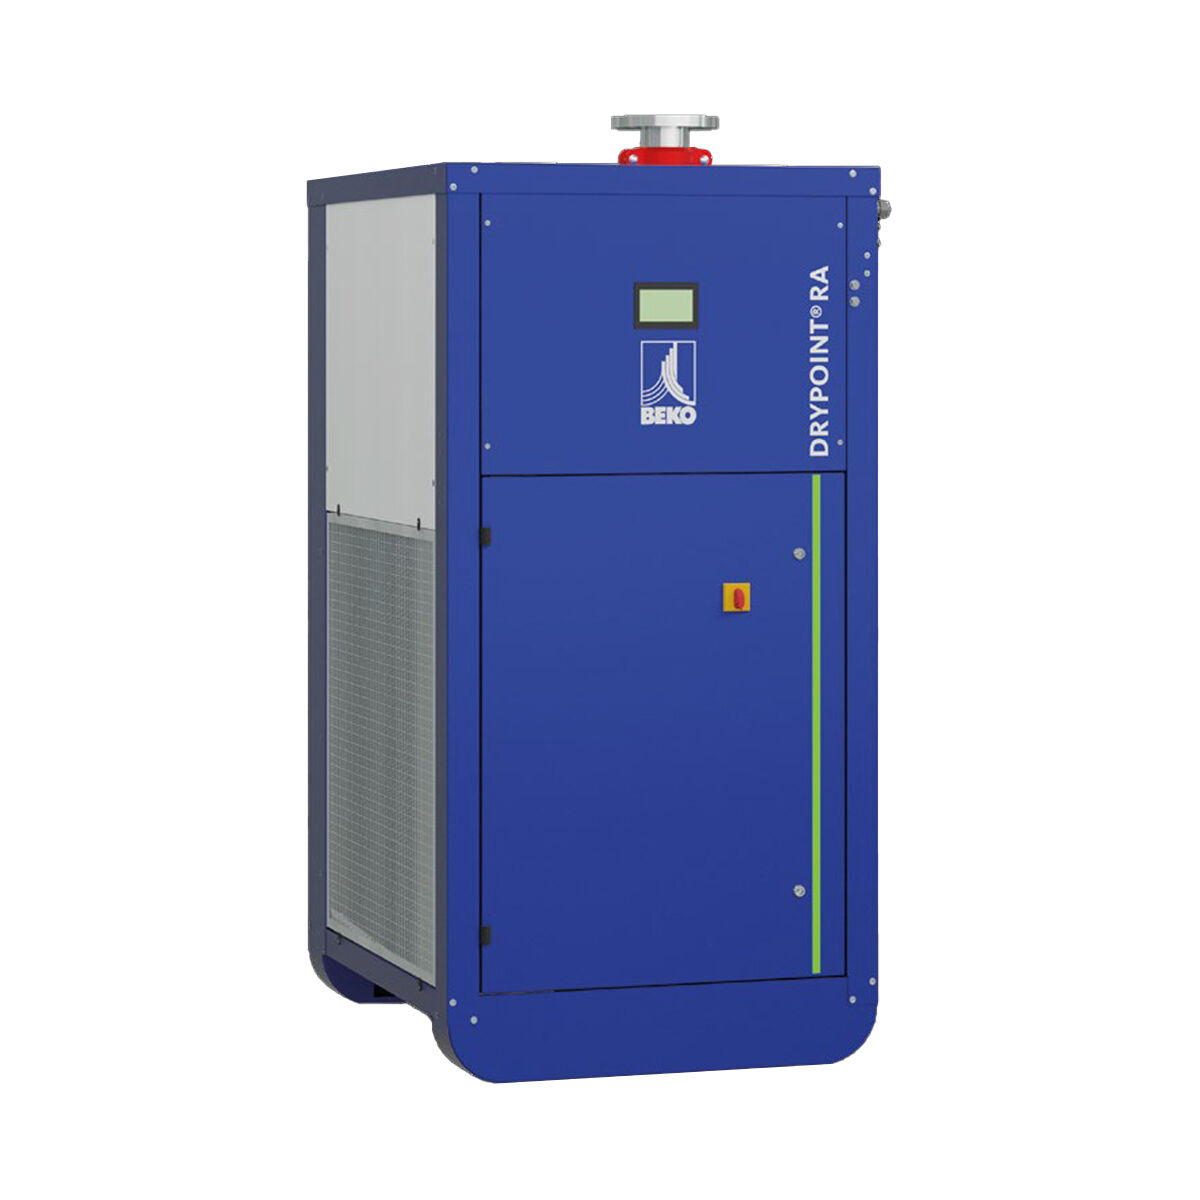 BEKO DRYPOINT RA III 20/AC essiccatore a refrigerazione ad aria compressa con Bekomat, raffreddato ad aria